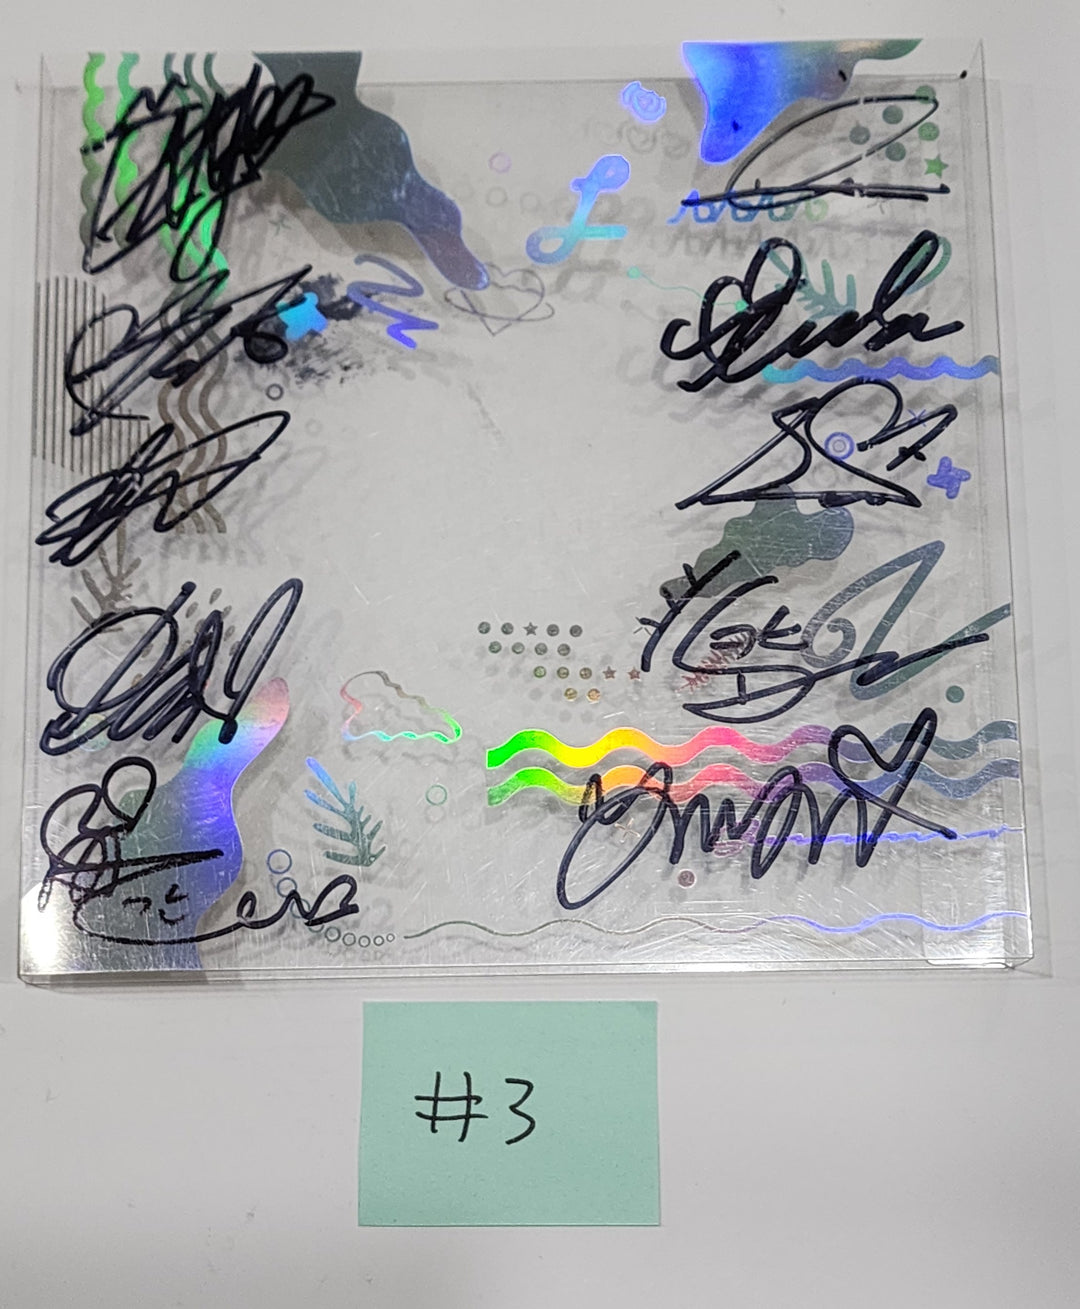 WJSN - Hand Autographed(Signed) Promo Album [24.6.14]